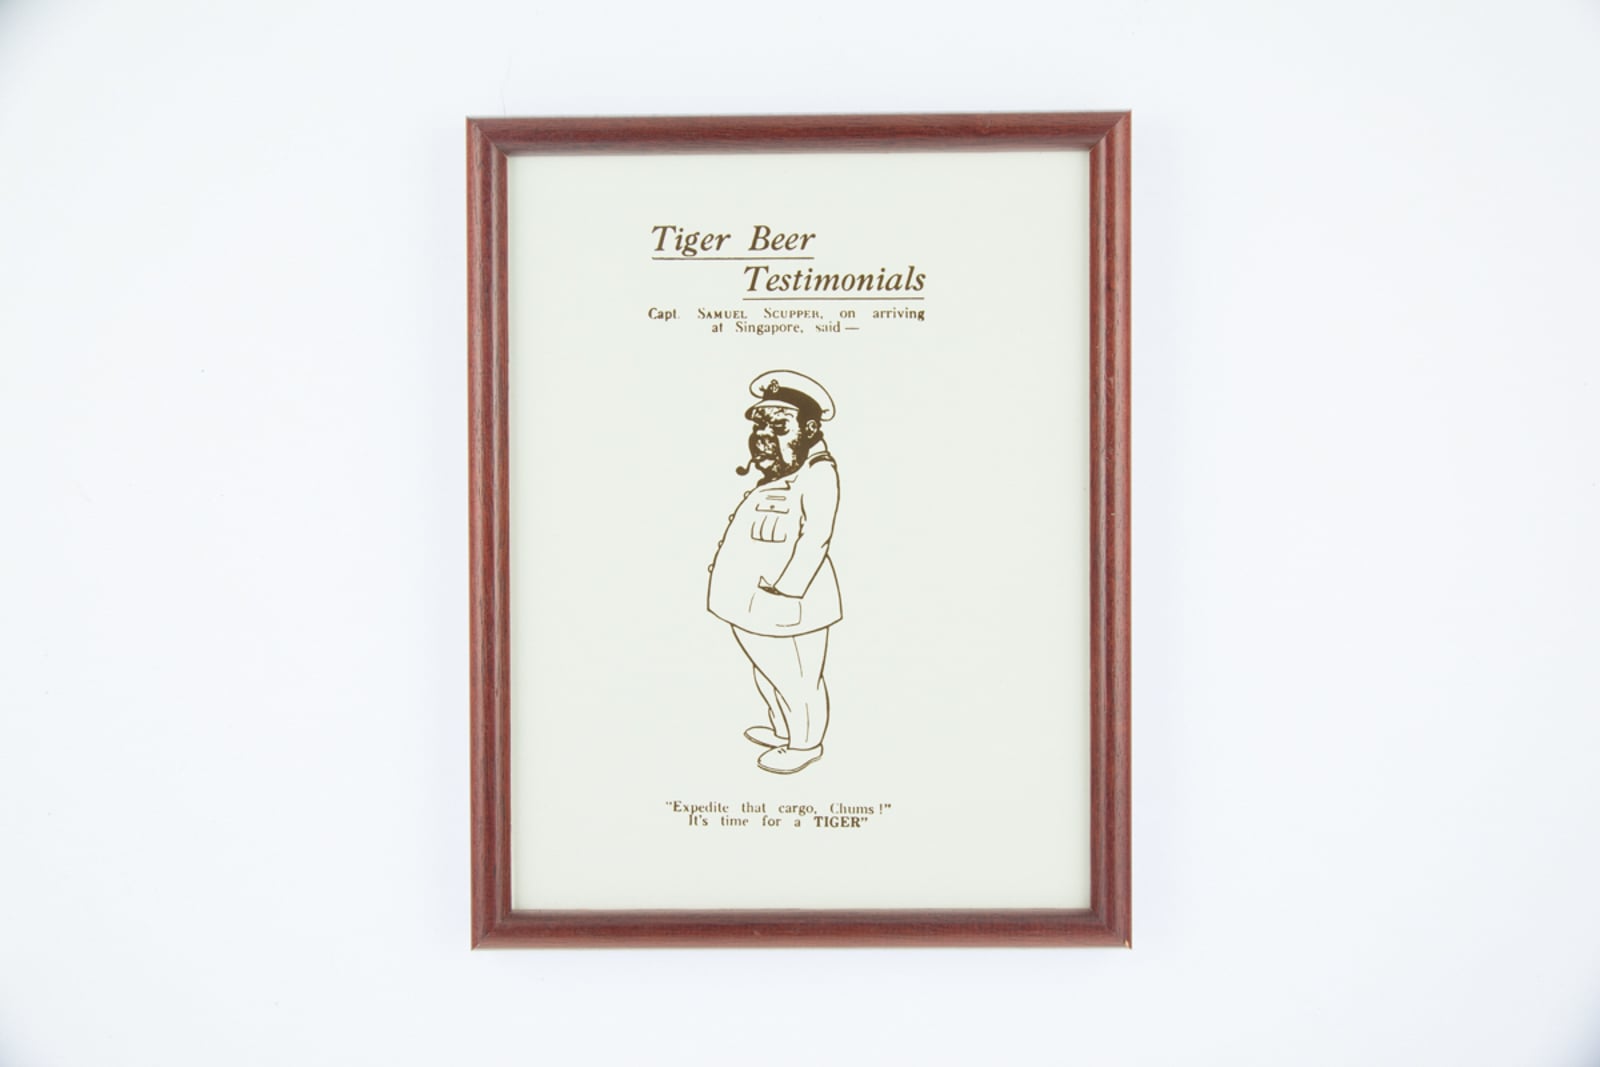 Malayan Breweries "Tiger Beer Testimonials - Capt Samuel Scupper" Print Advertisement Reproduction